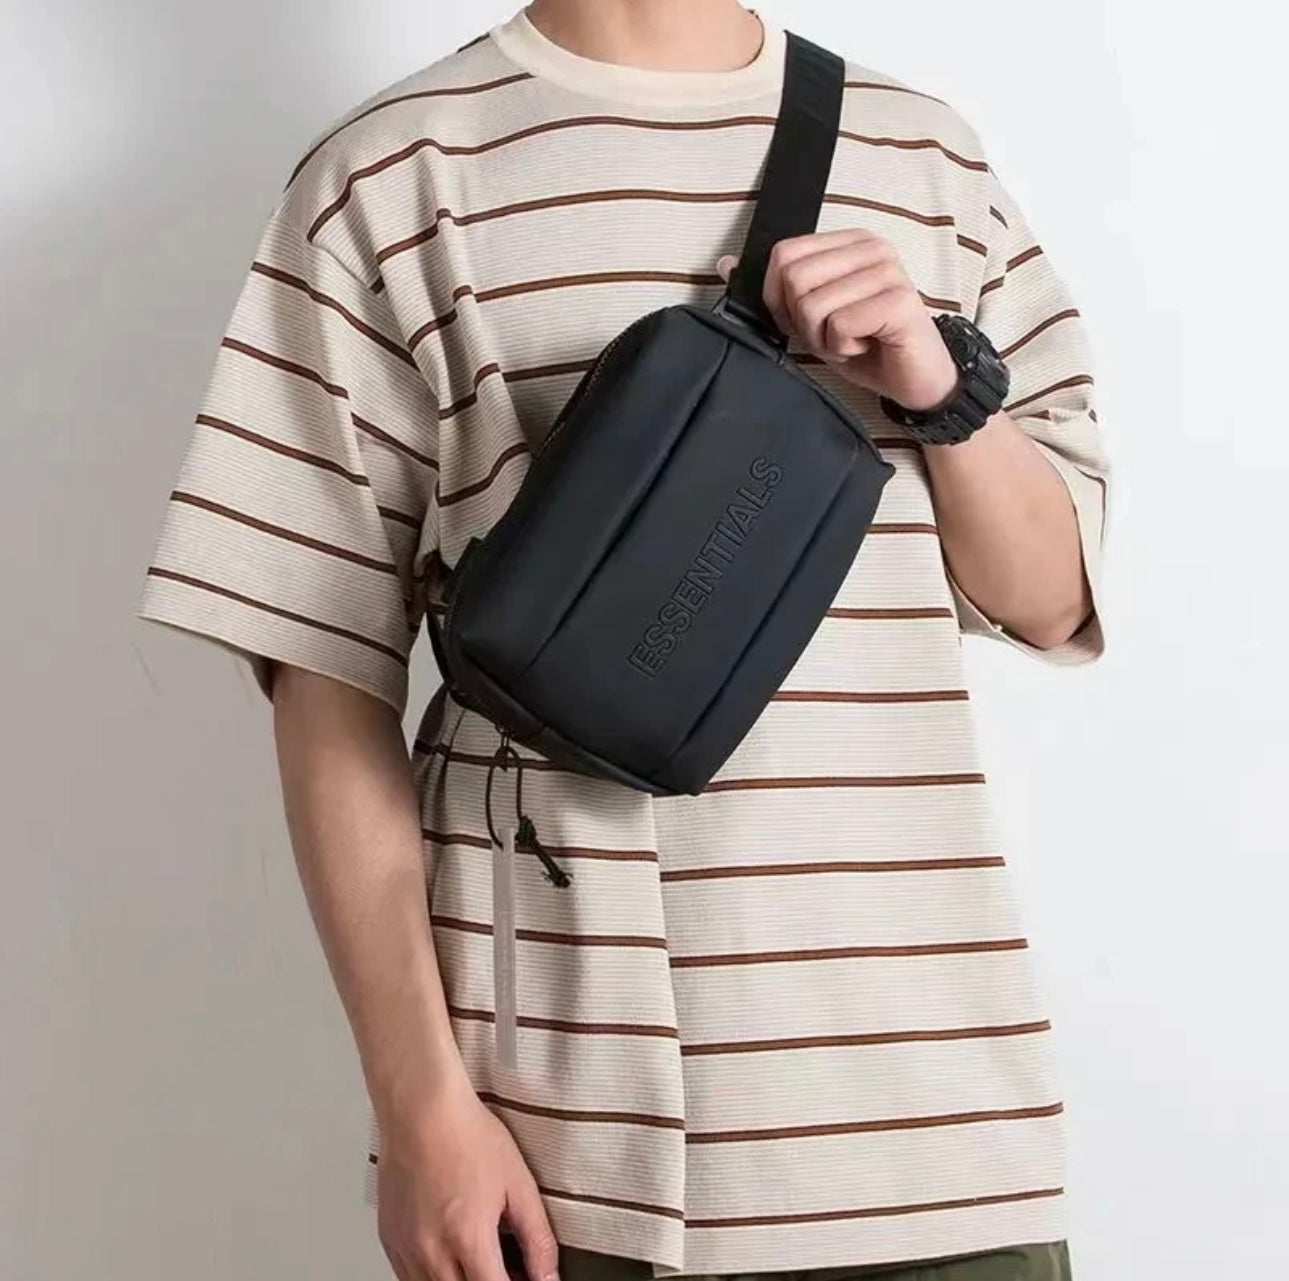 ESSENTIALS Luxury Men & Women Crossbody / Shoulder Bag - Large Capacity Casual